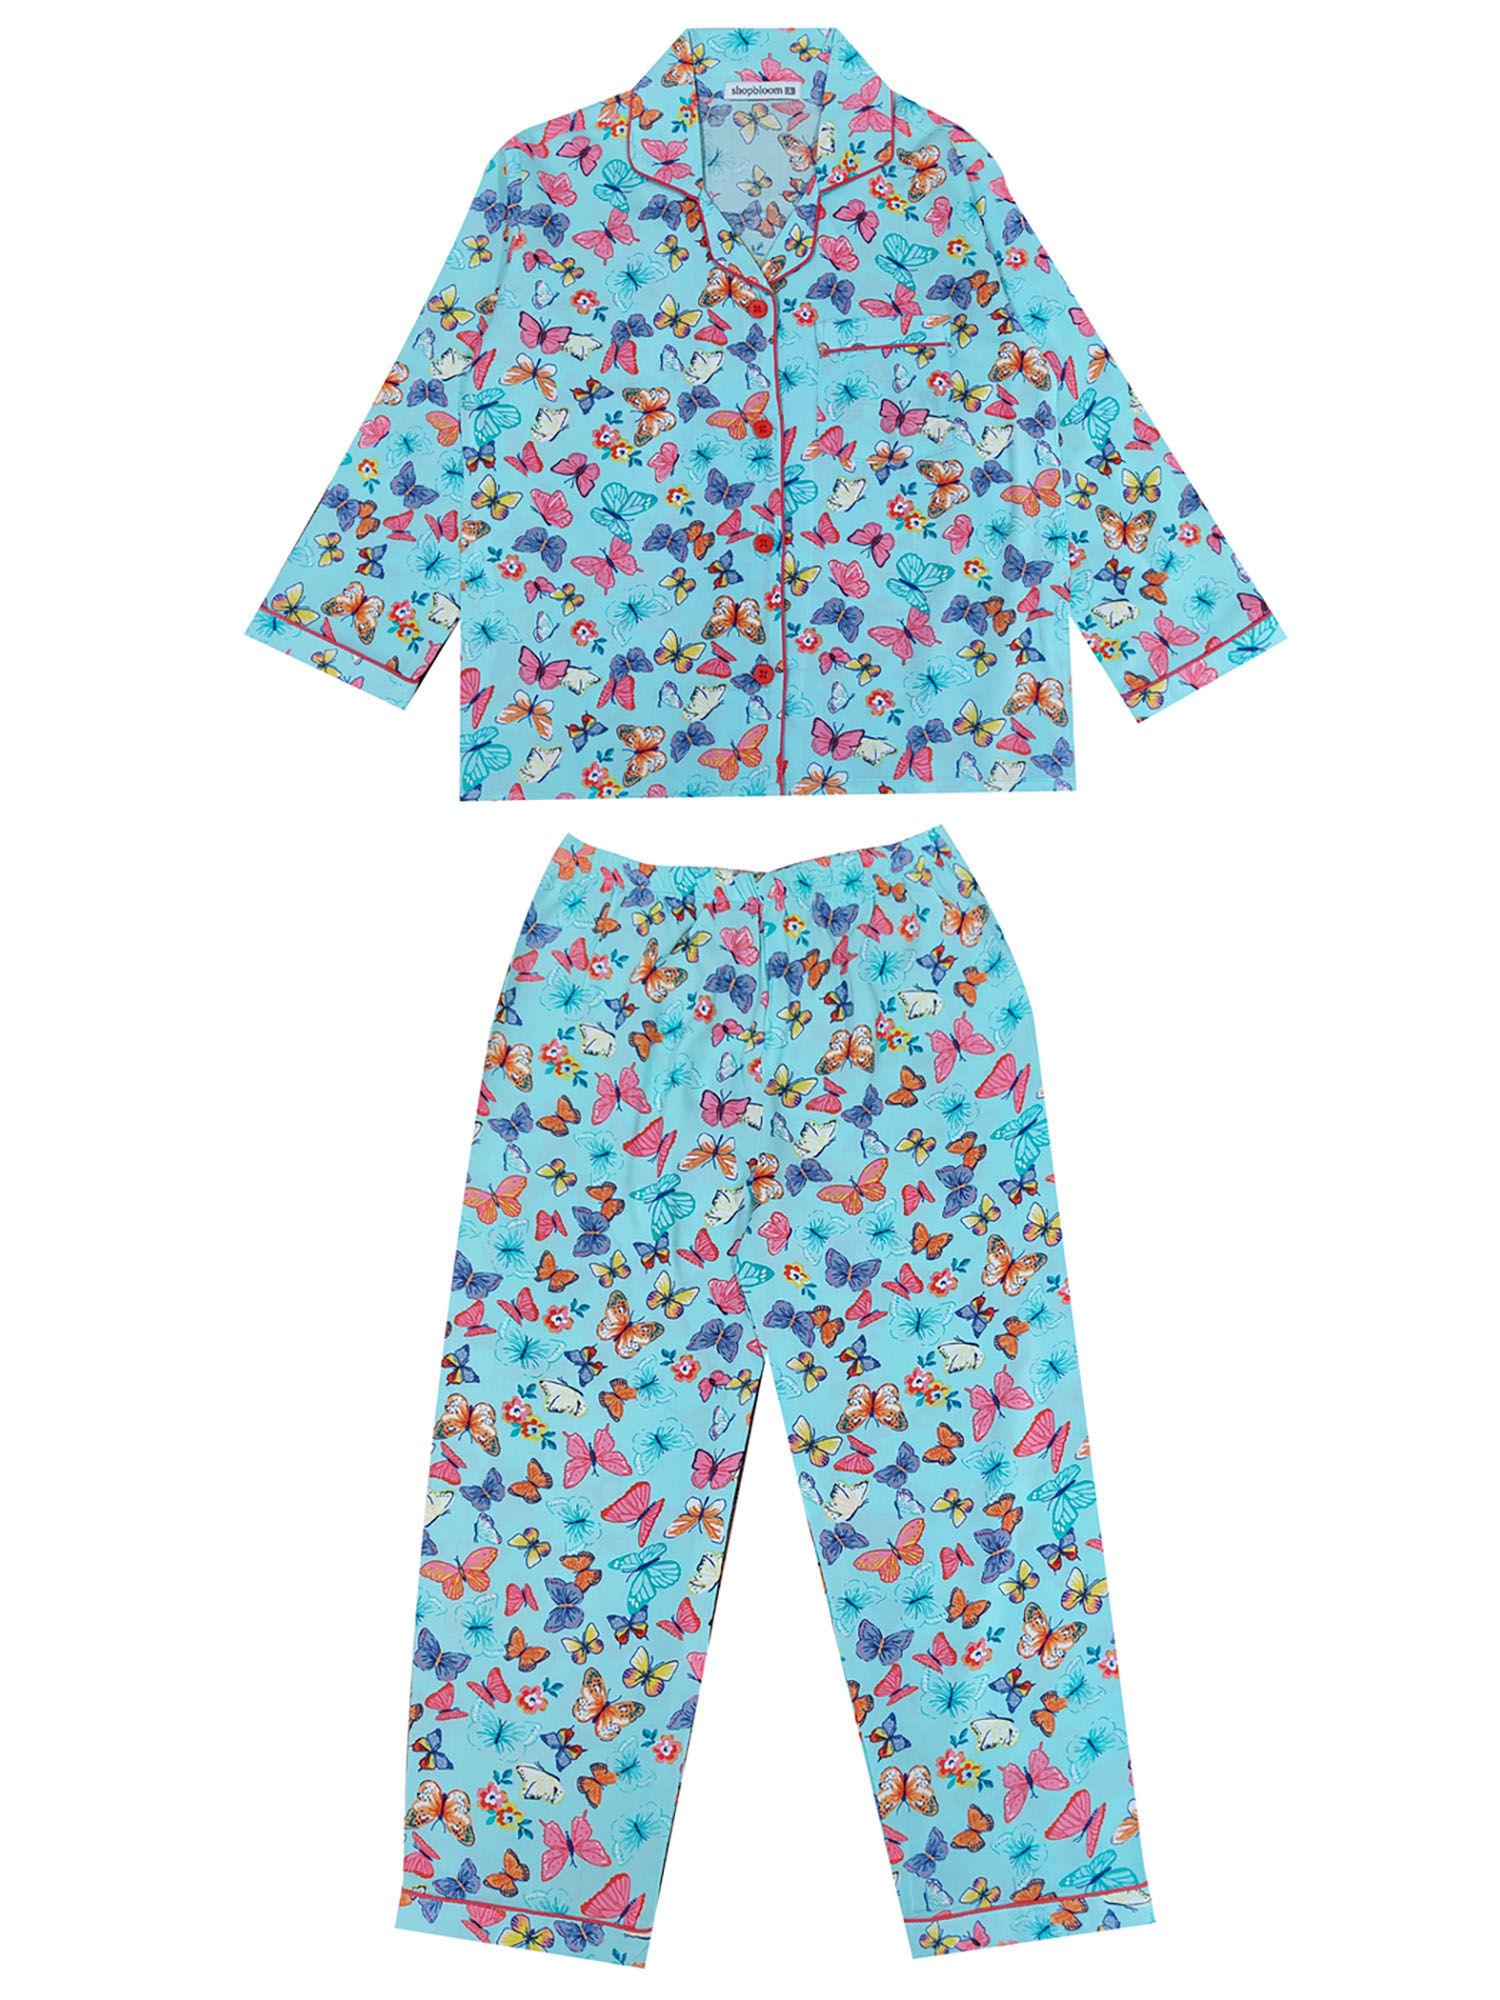 butterfly print long sleeve kids night suit (set of 2)